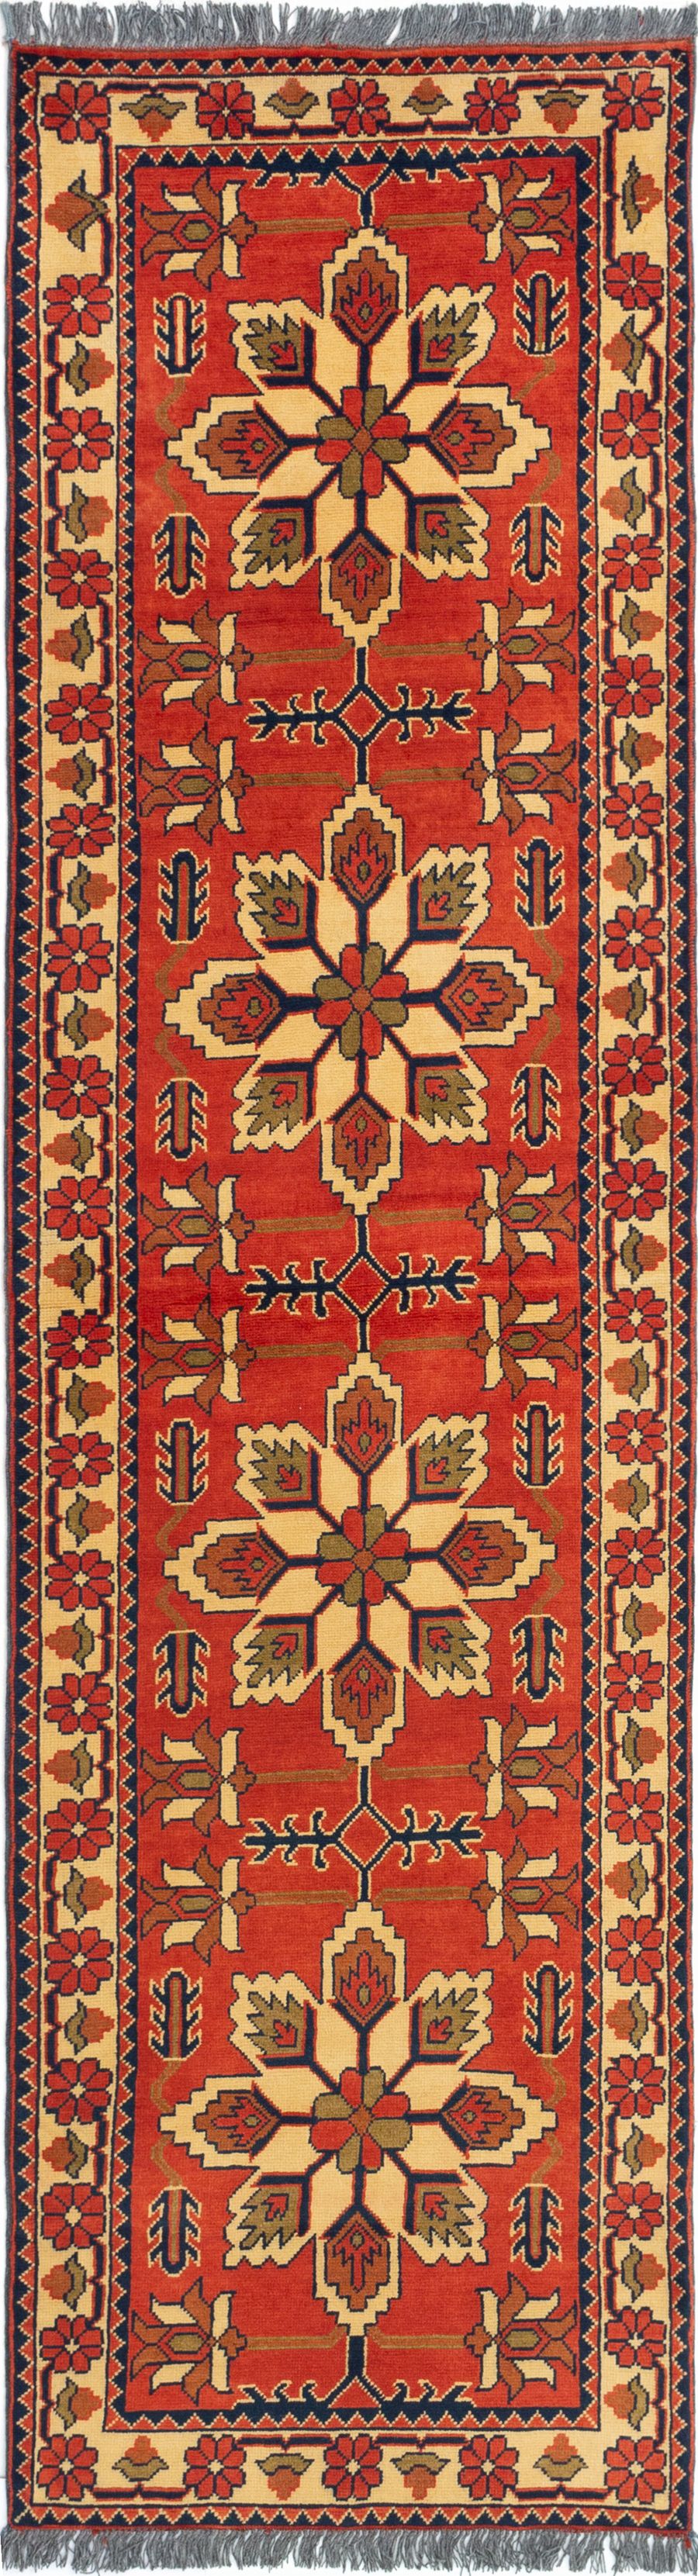 Hand-knotted Finest Kargahi Dark Copper Wool Rug 2'8" x 9'11" Size: 2'8" x 9'11"  